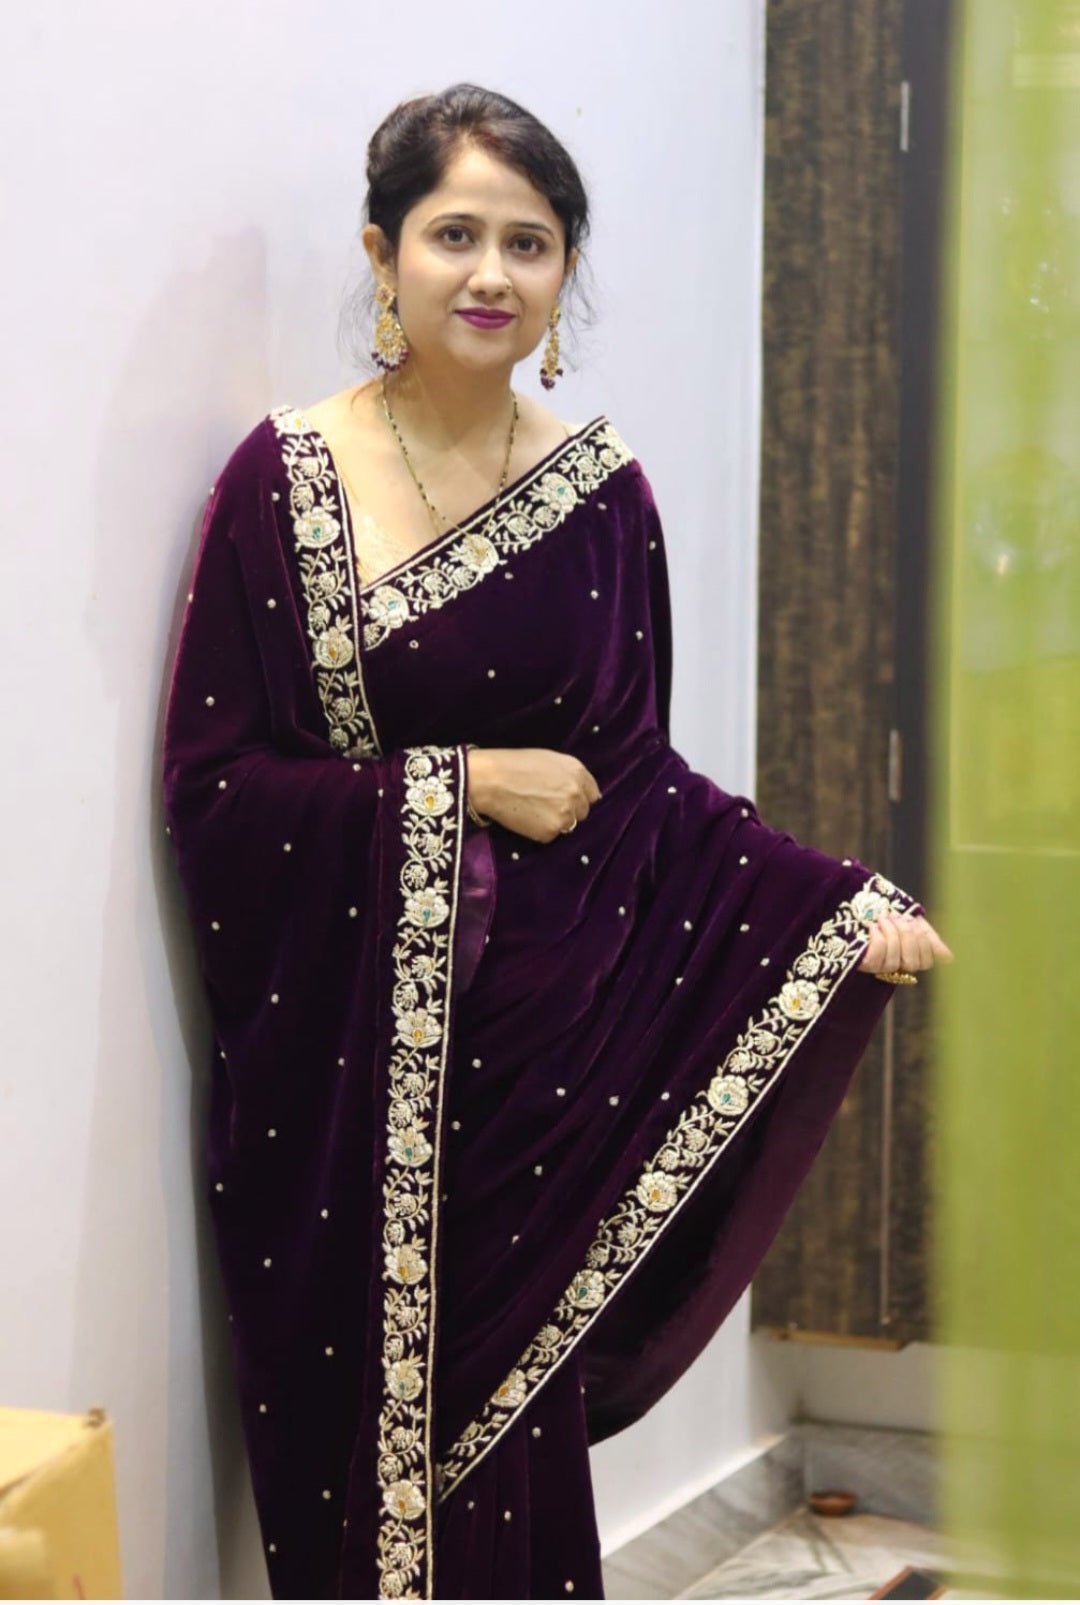 Plum Hand Embroidered Silk Velvet Saree - NawabiLehaja